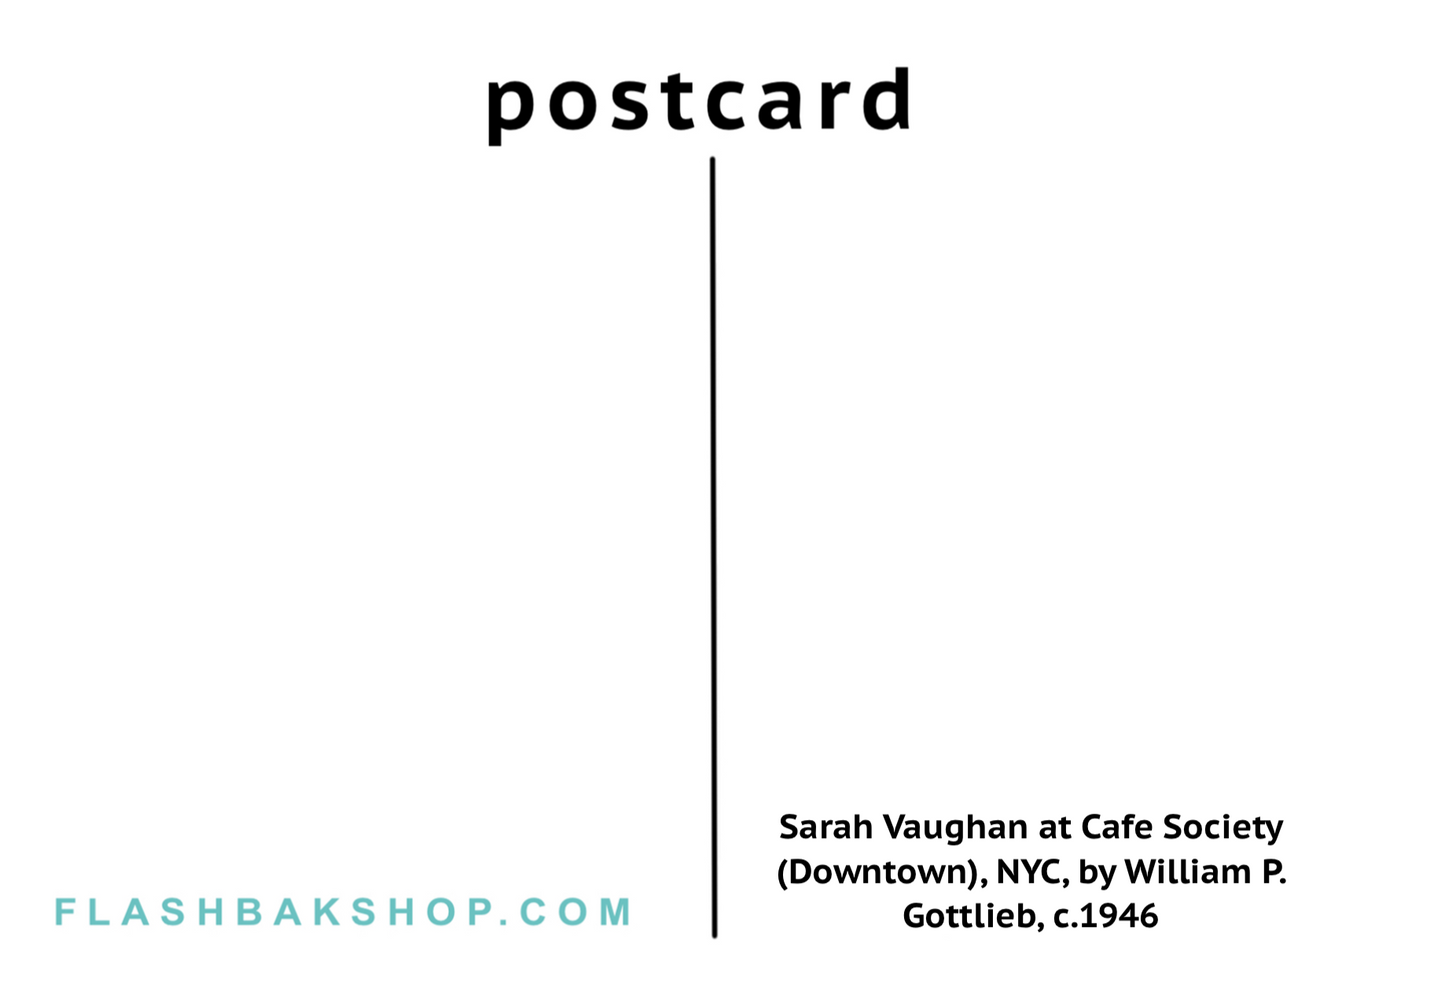 Sarah Vaughan en Cafe Society (Downtown), Nueva York por William P. Gottlieb, c.1946 - Postal